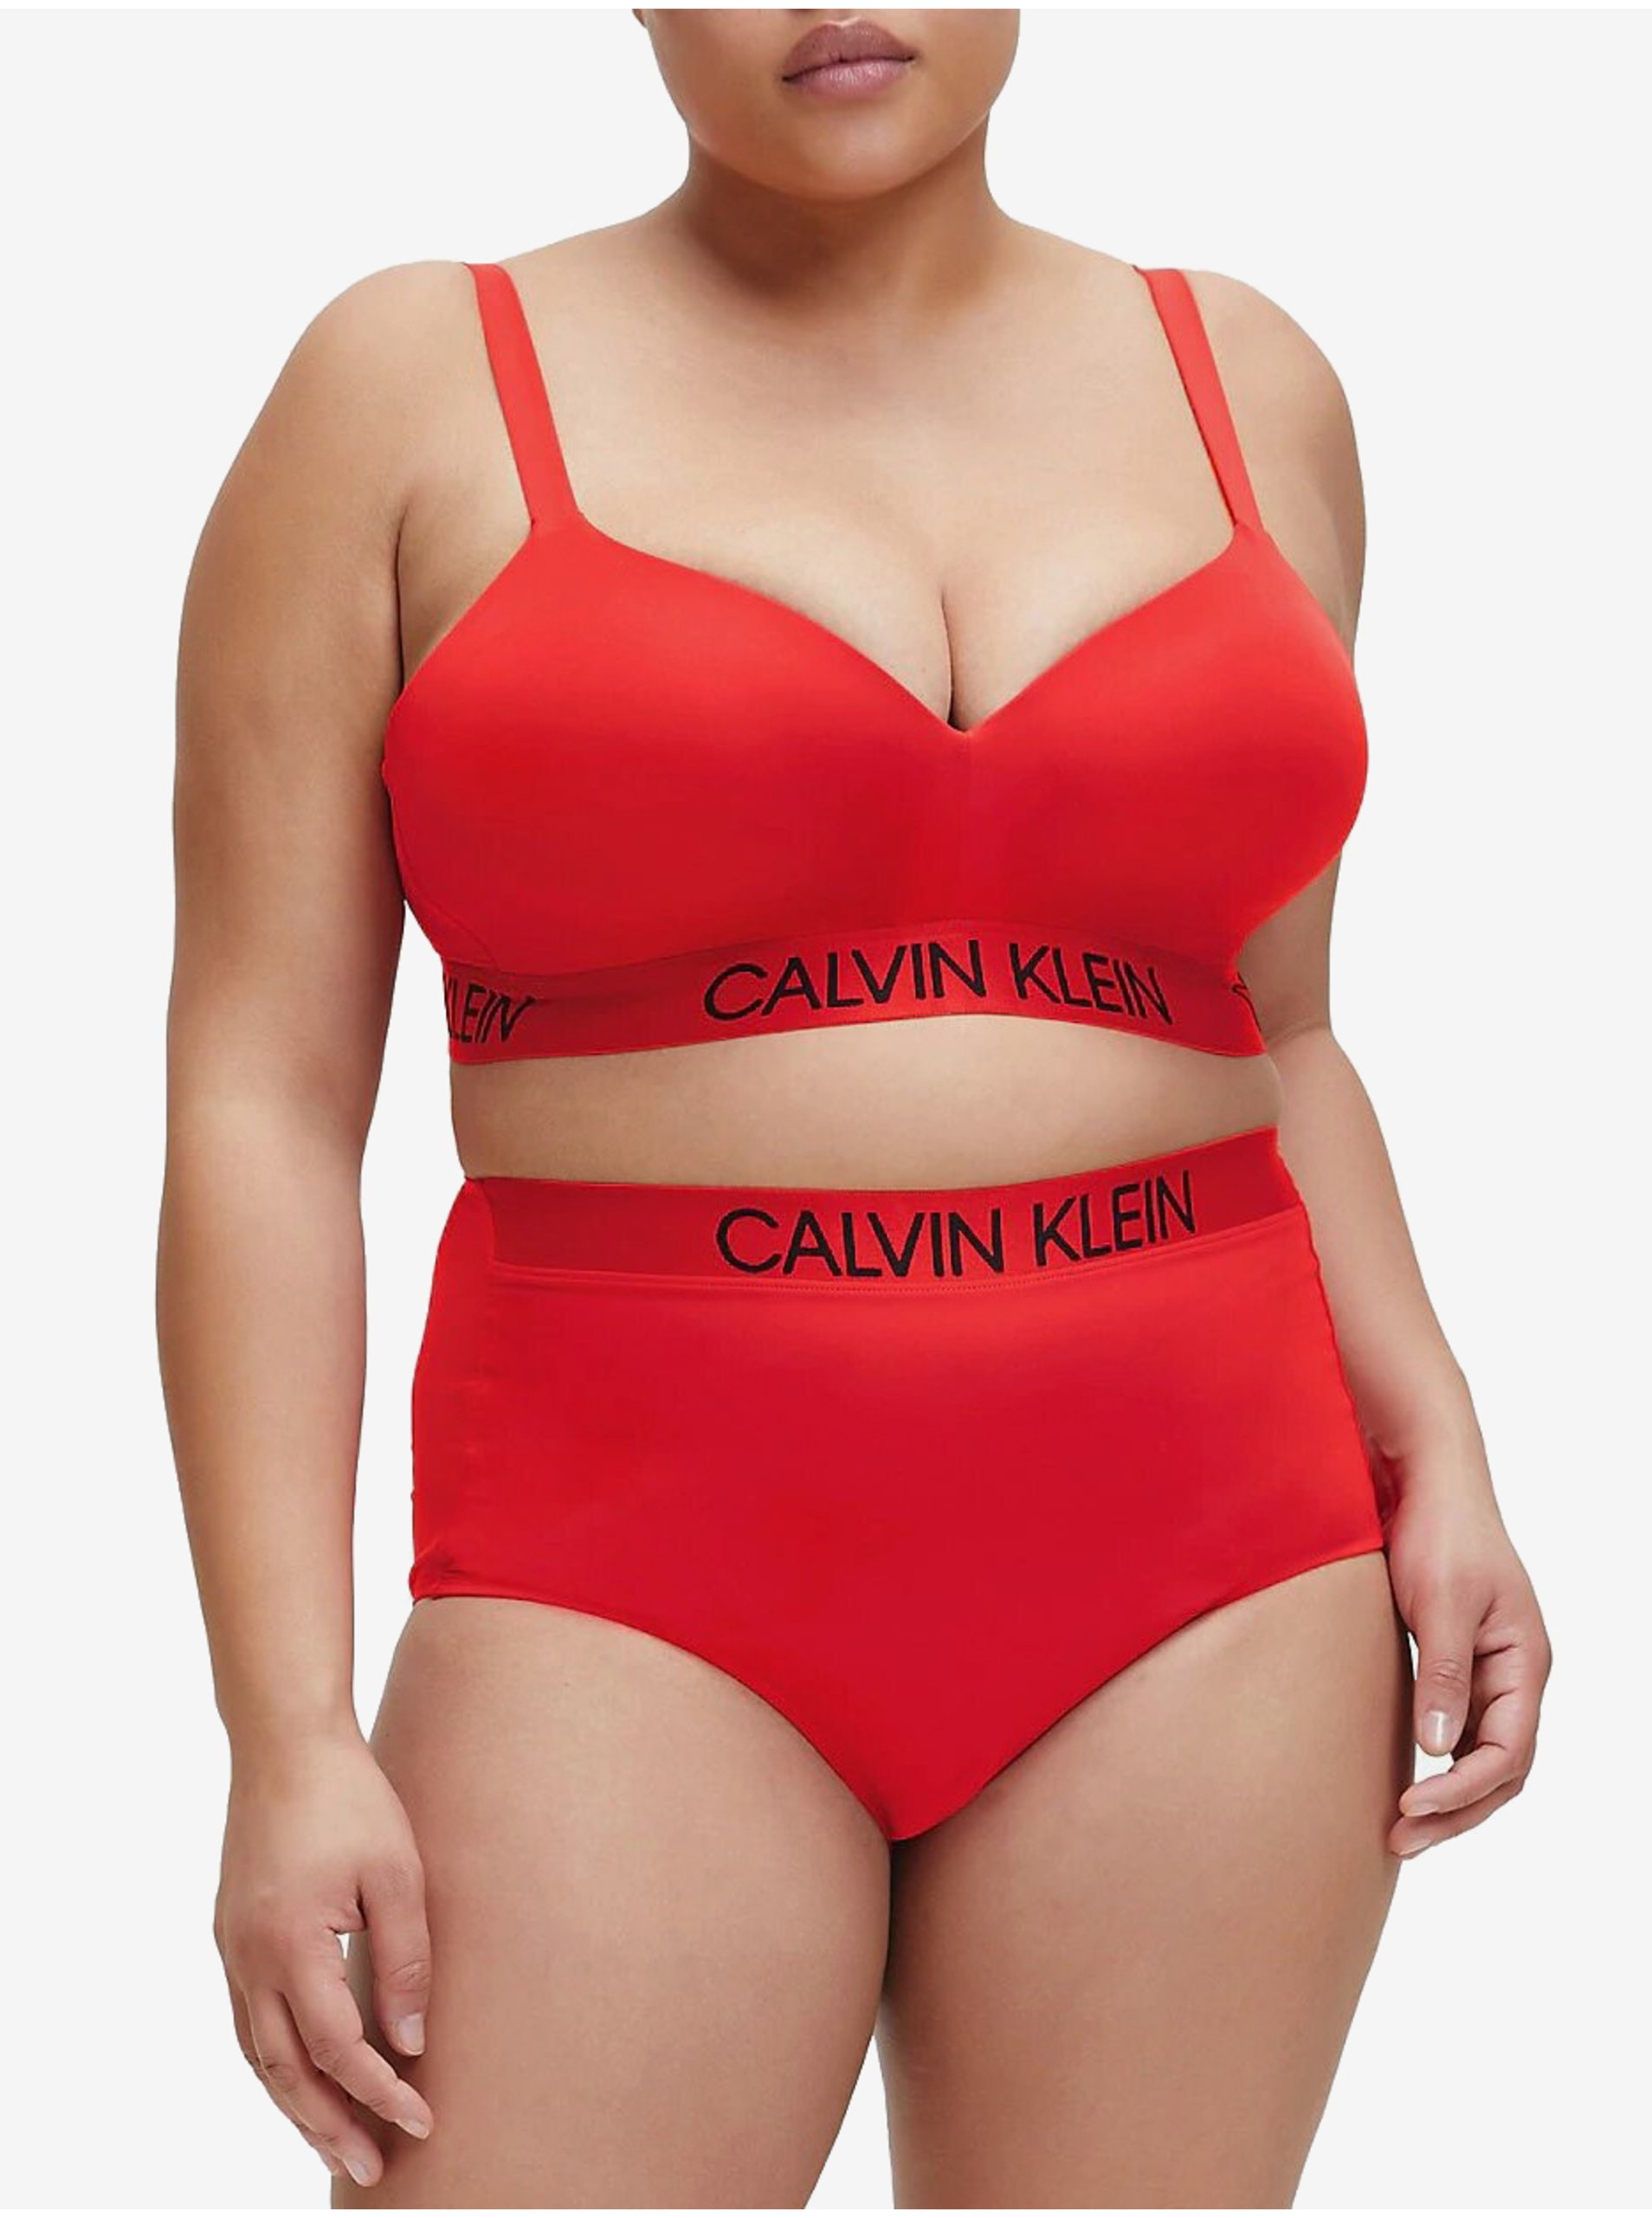 E-shop Calvin Klein červený horný diel plaviek Demi Bralette Plus Size High Risk Red